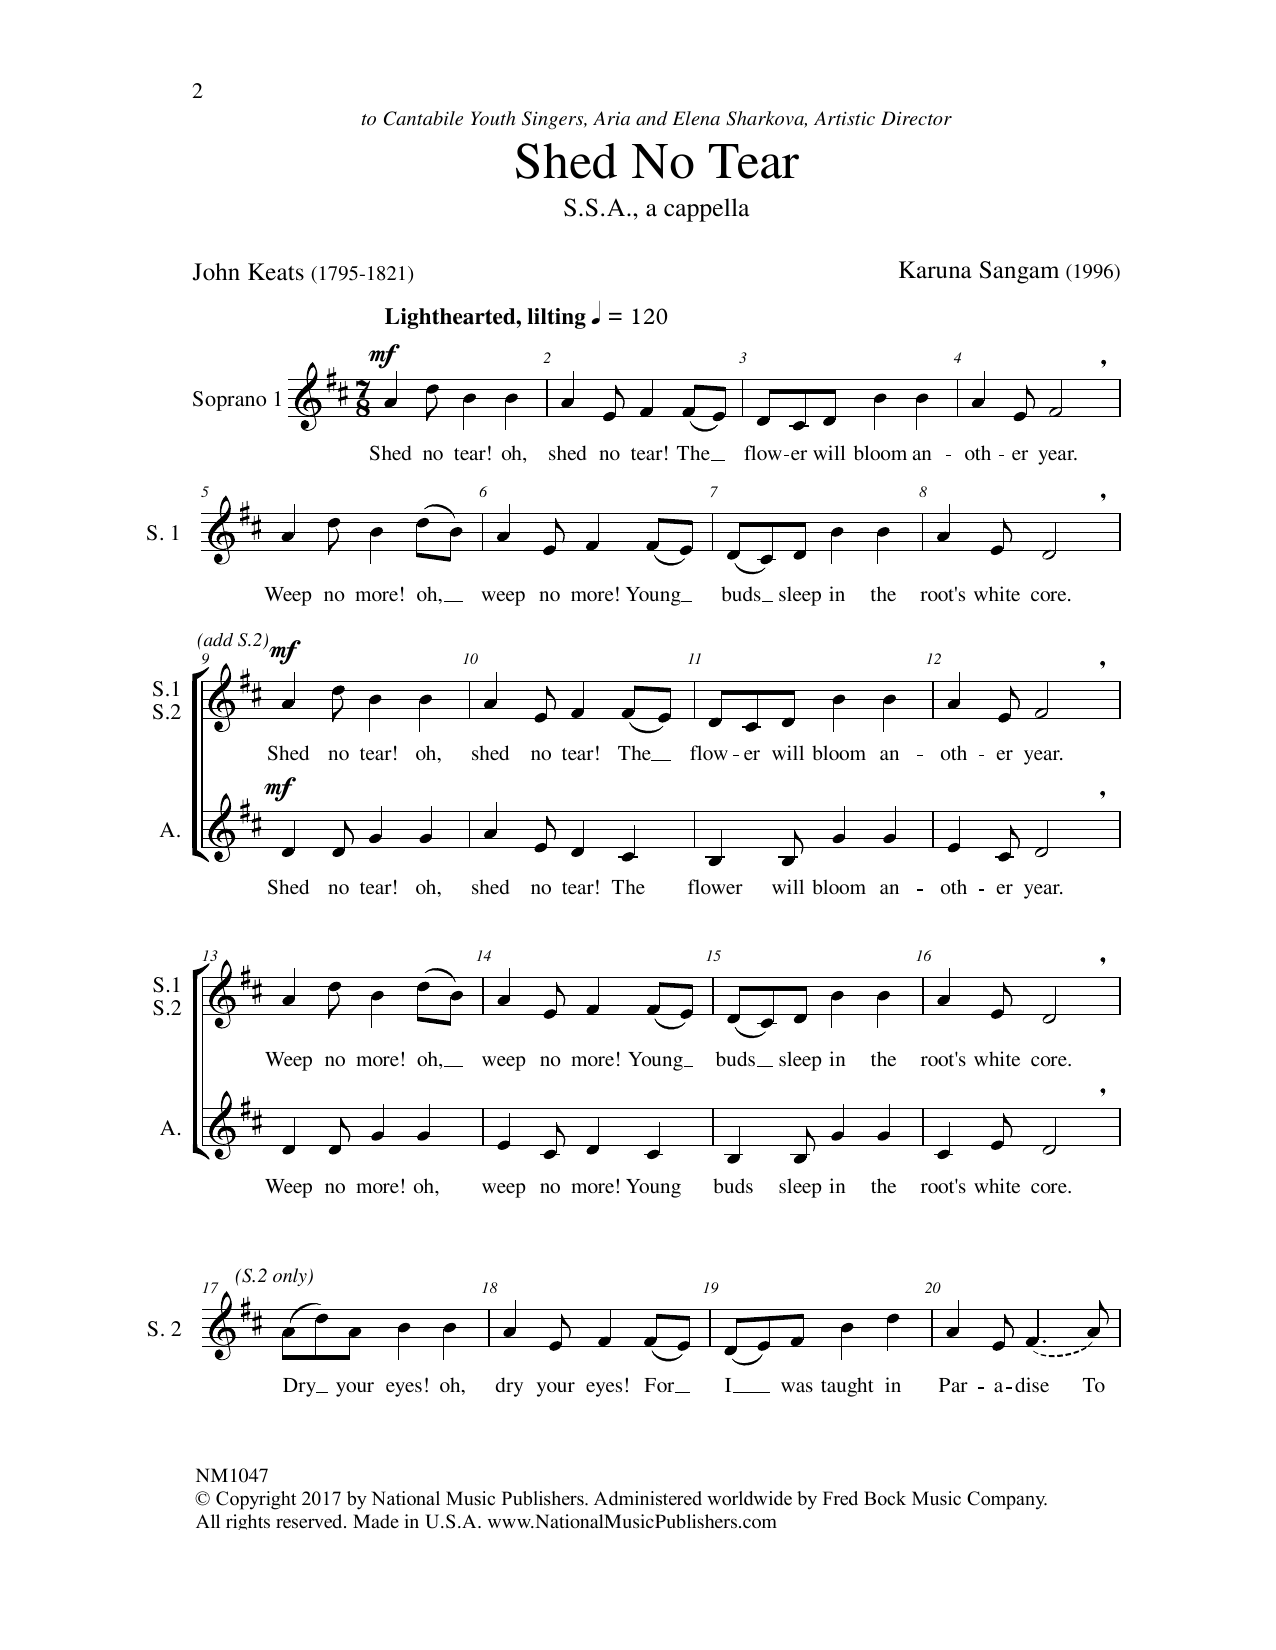 John Keats Shed No Tear Sheet Music Notes & Chords for Choral - Download or Print PDF